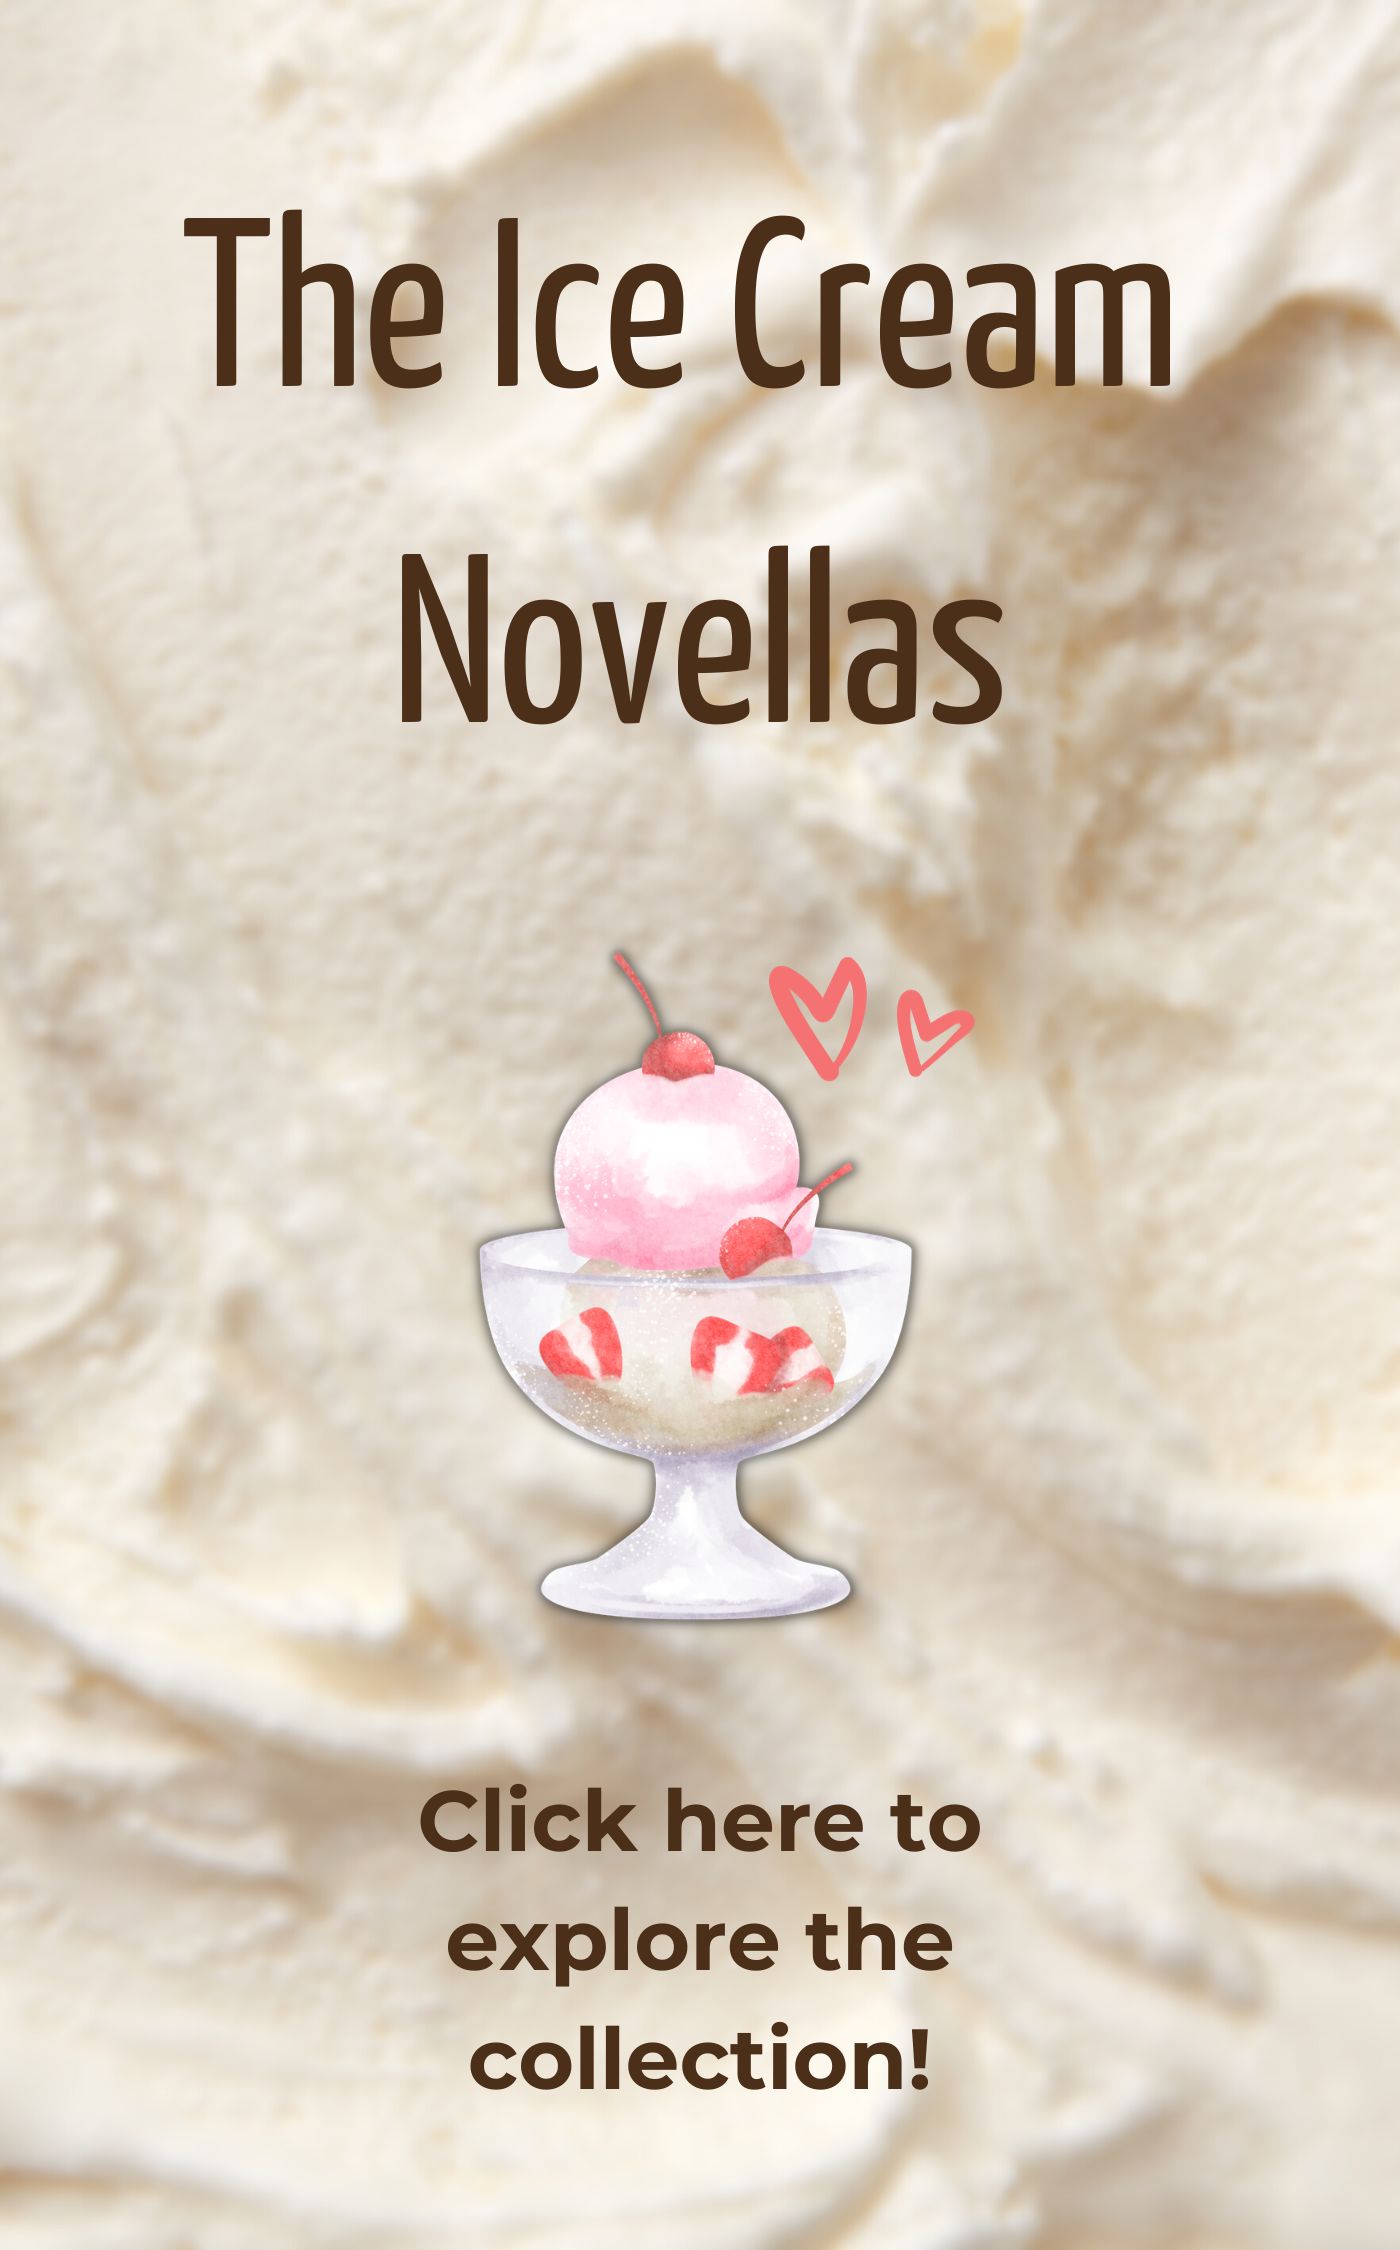 The Ice Cream Novellas